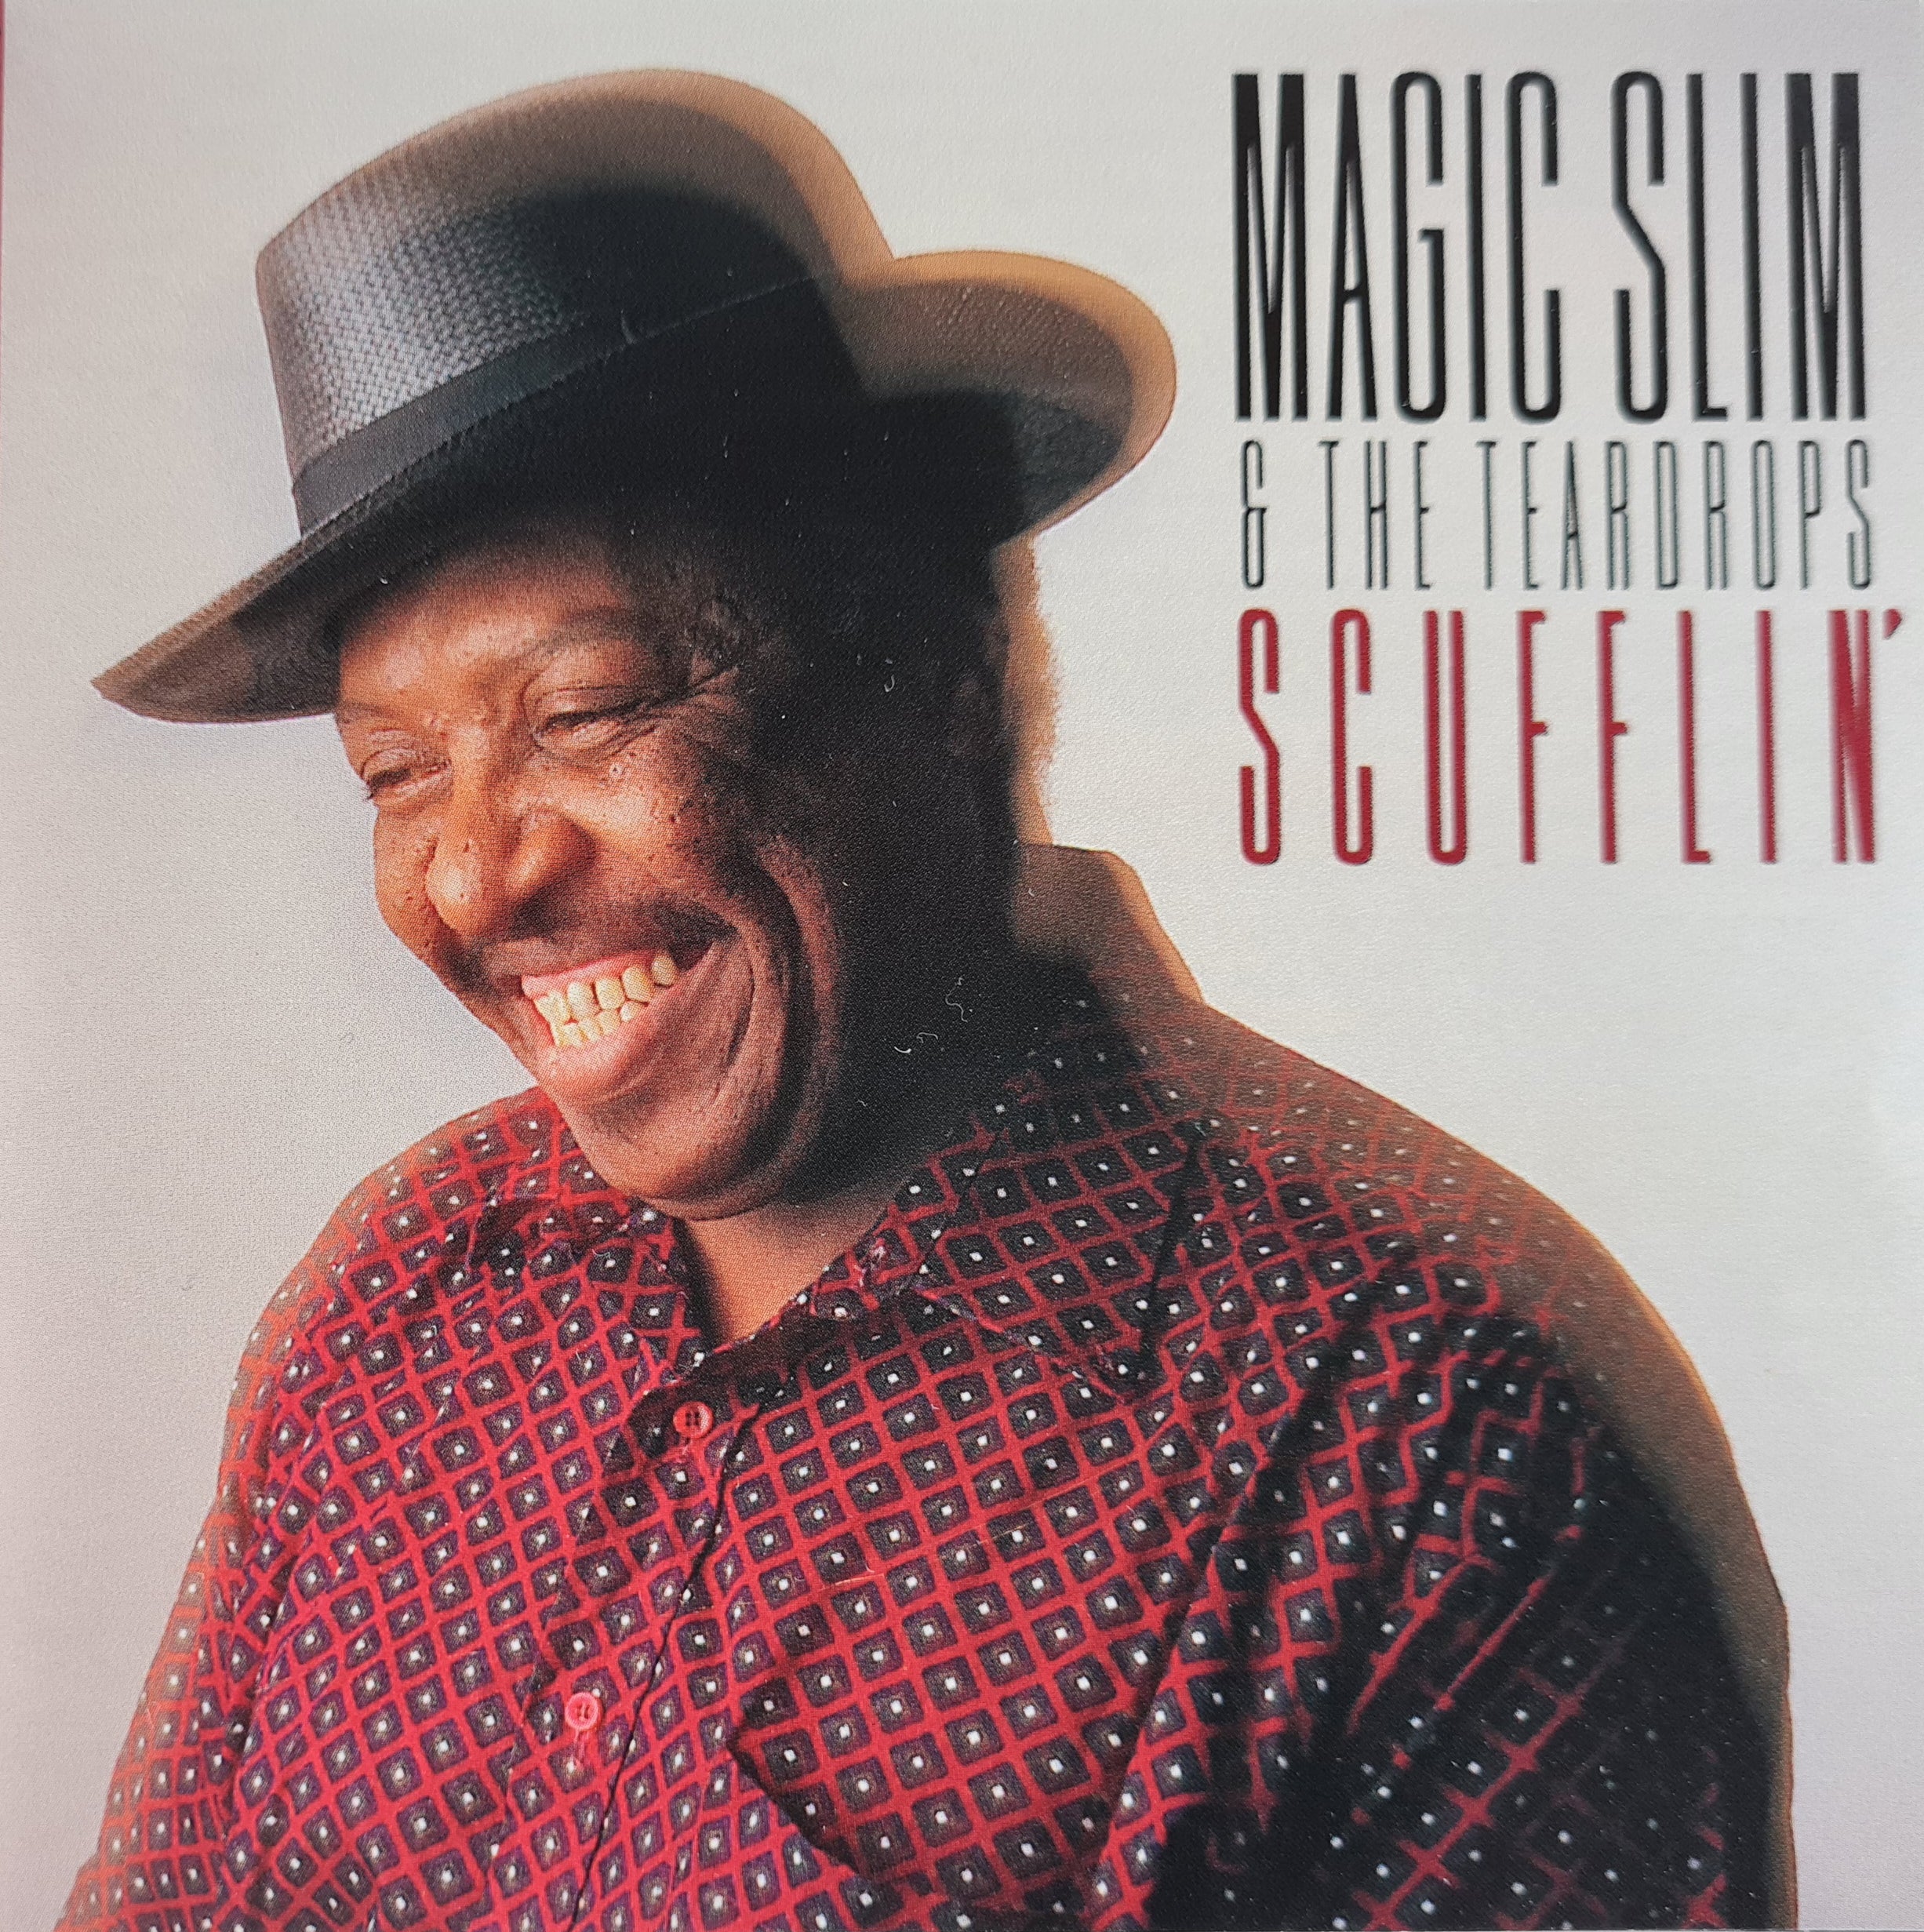 Magic Slim and the Teardrops - Scufflin' (CD)